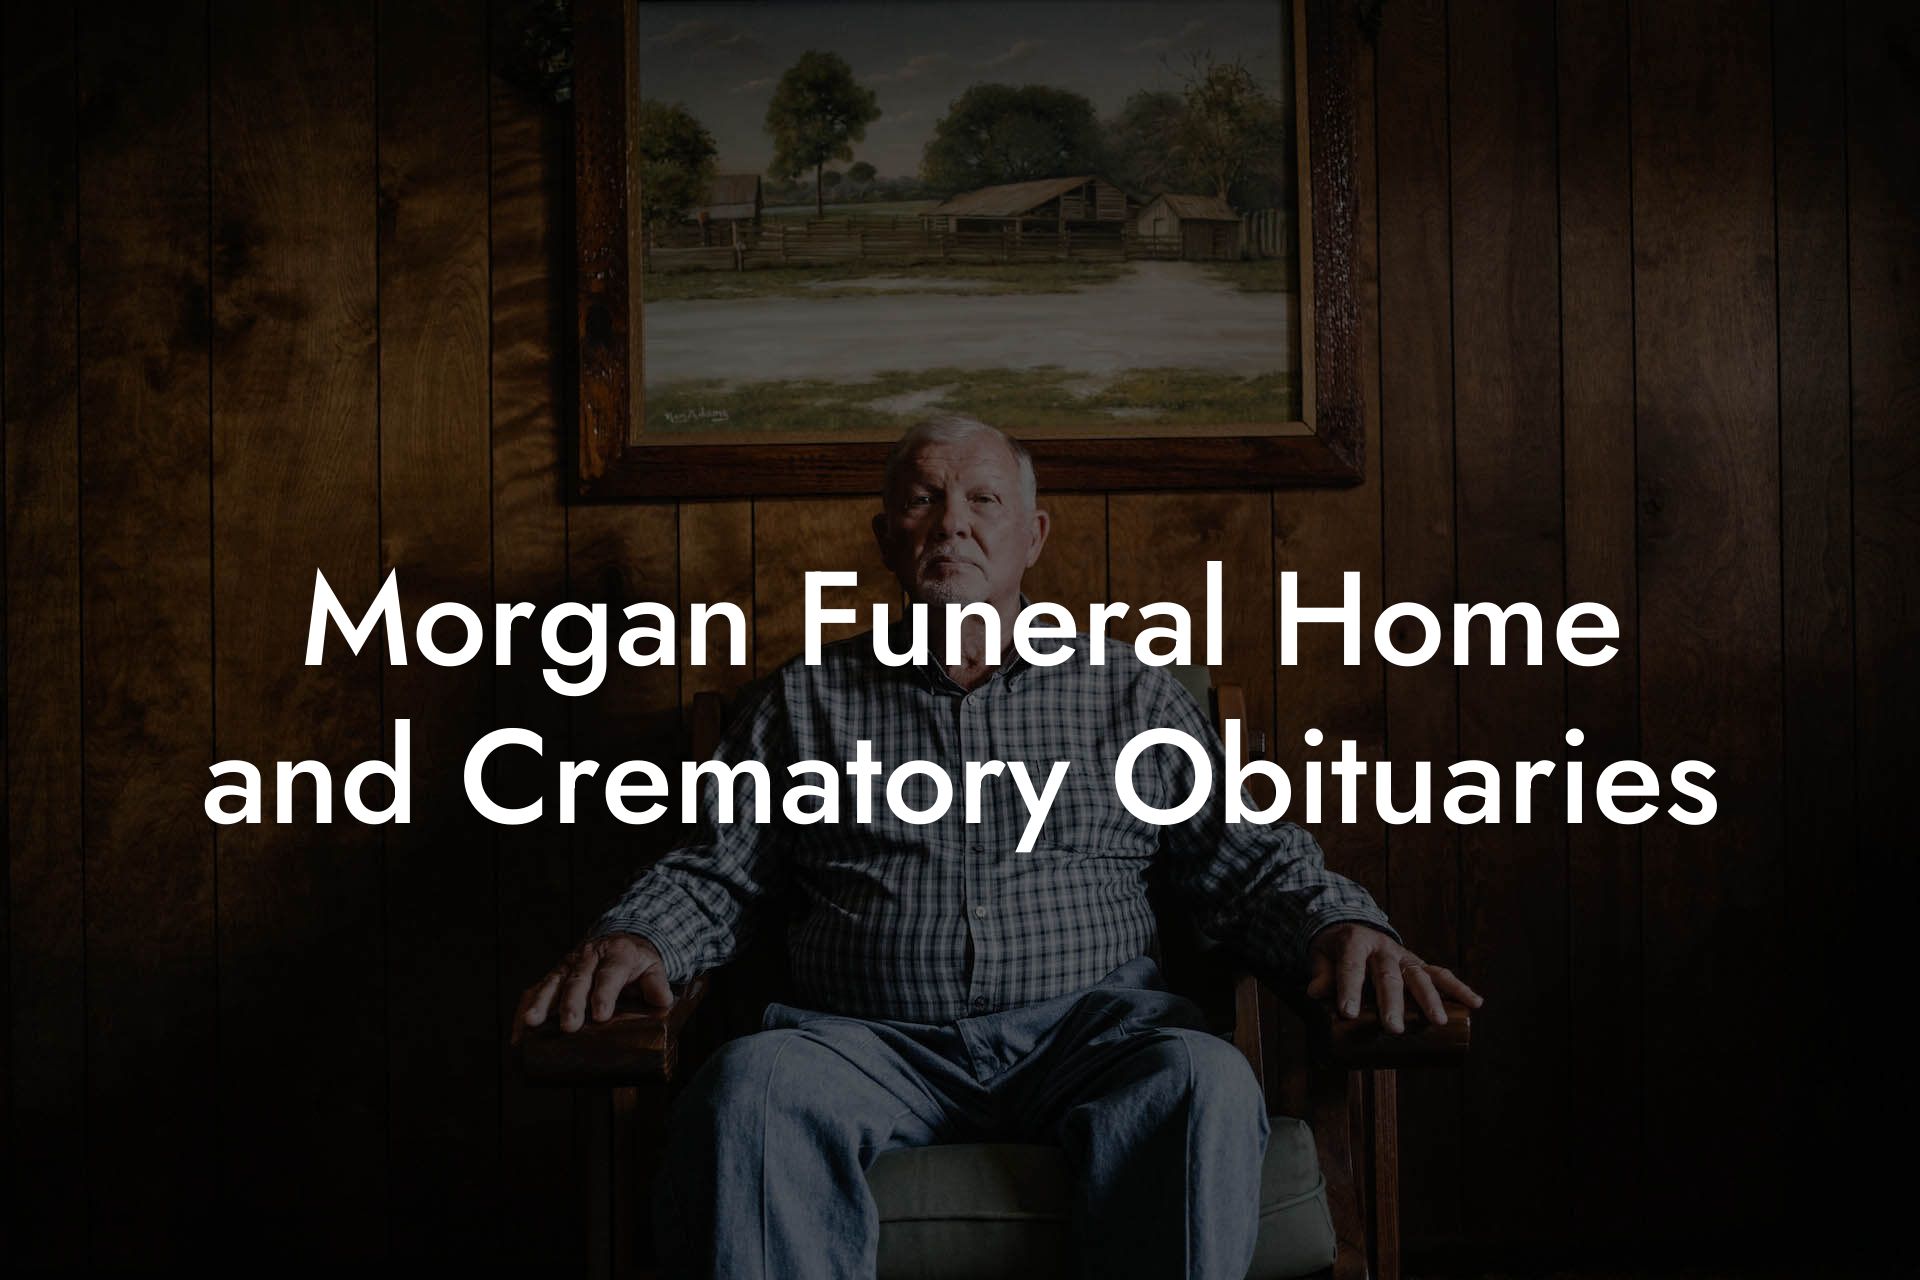 Morgan Funeral Home and Crematory Obituaries